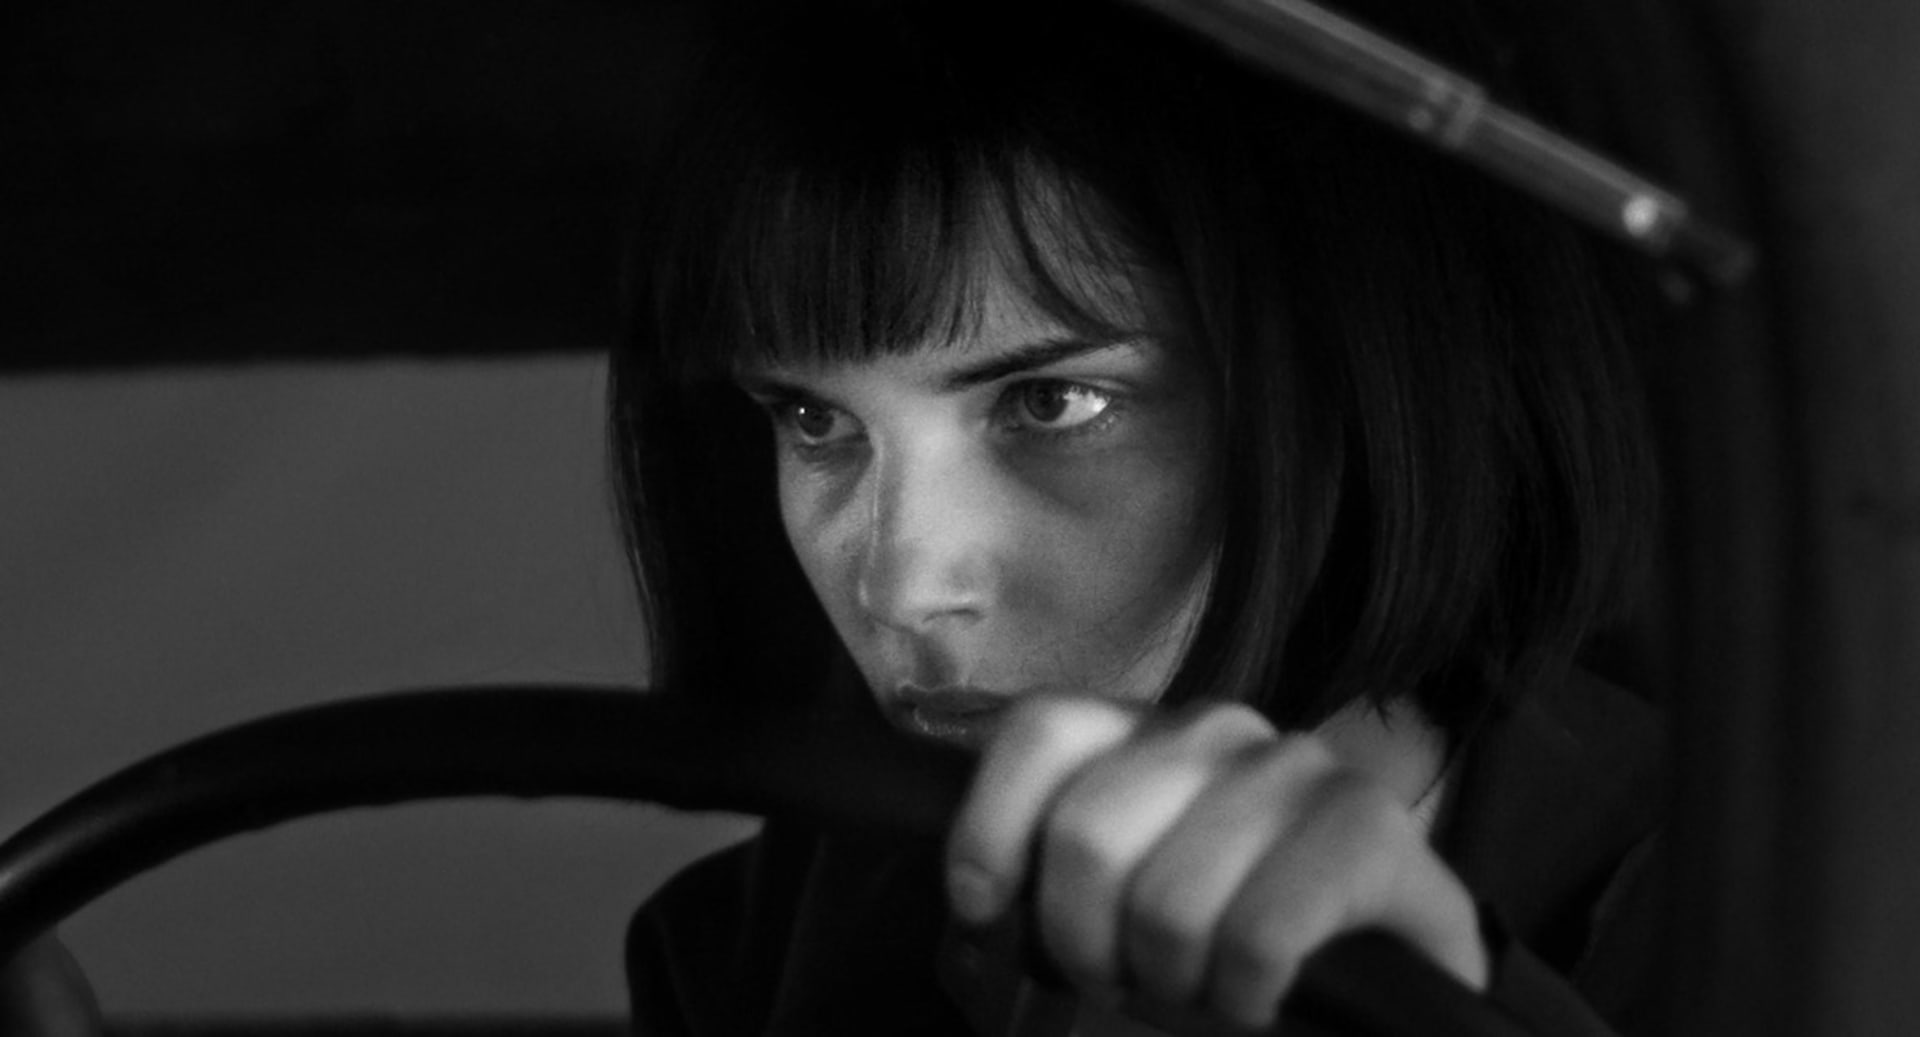 Postava Olgy Hepnarové ve filmu Já, Olga Hepnarová za volantem nákladního vozu.